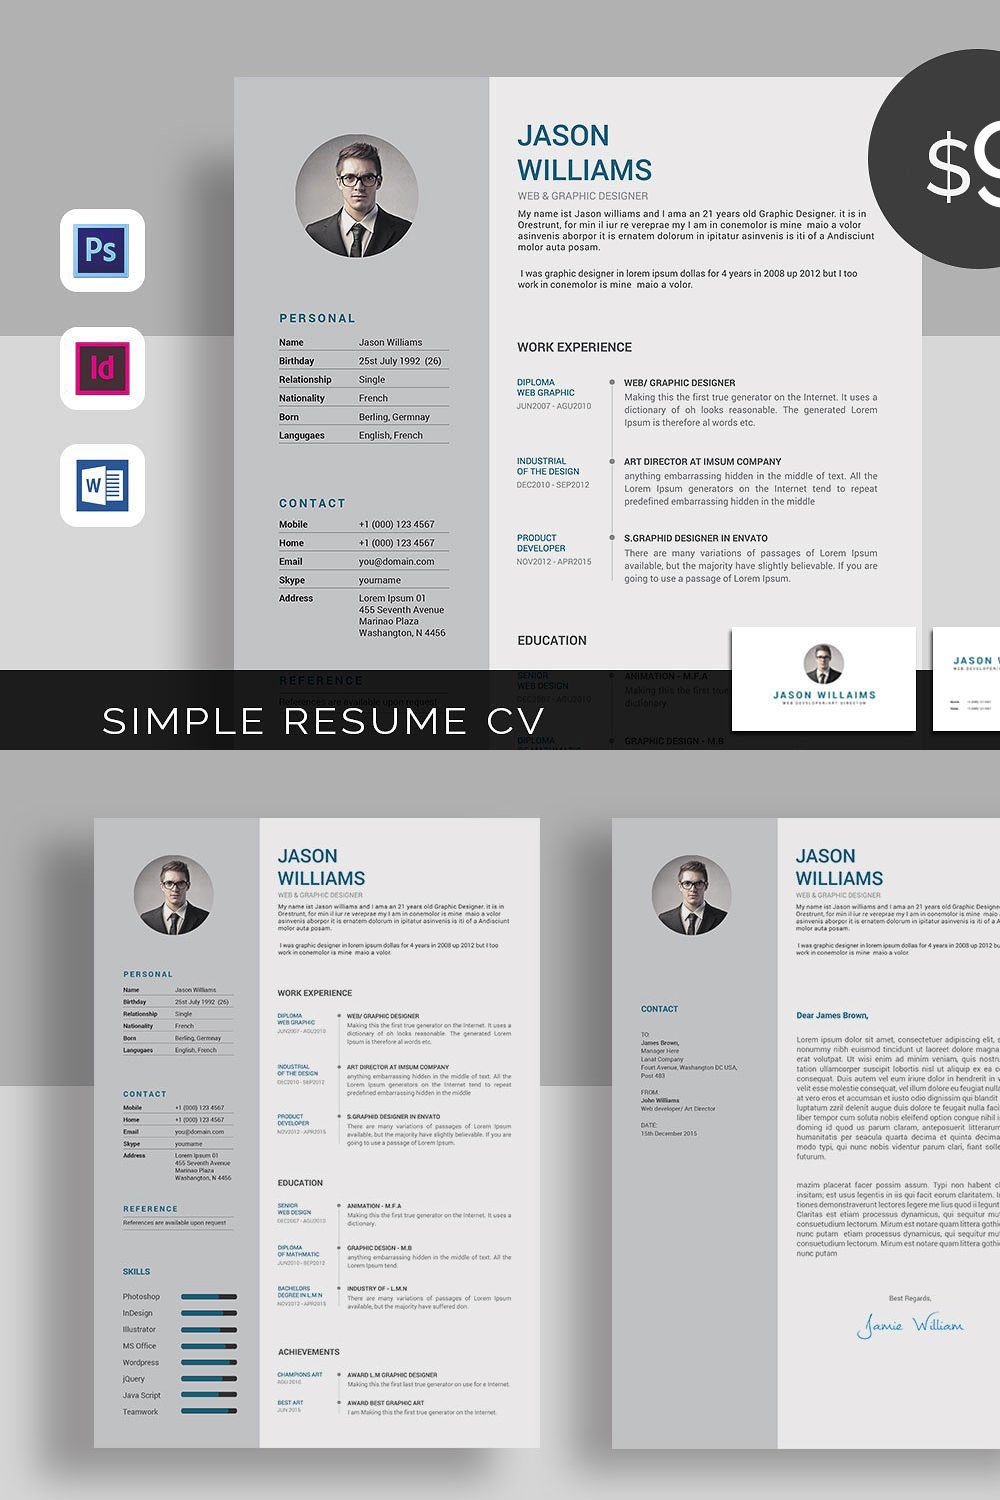 Resume CV pinterest preview image.